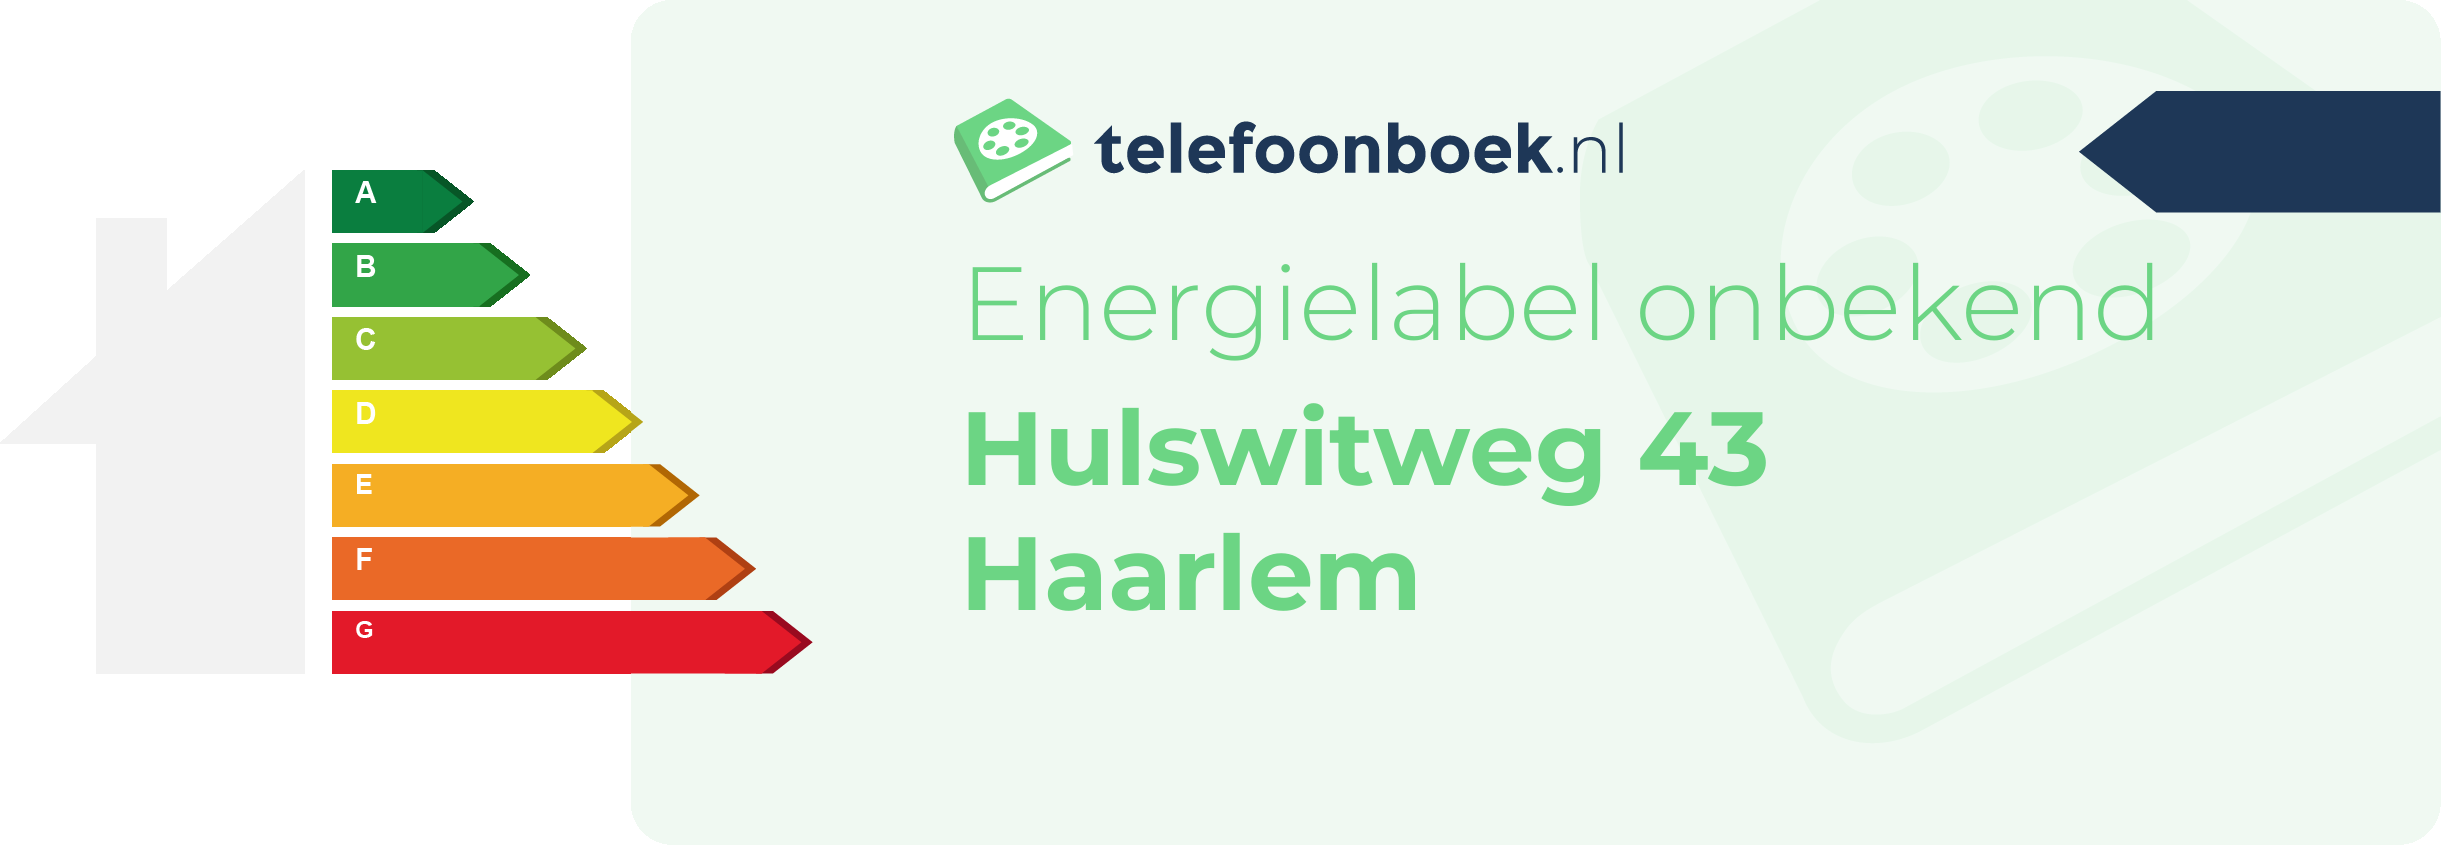 Energielabel Hulswitweg 43 Haarlem